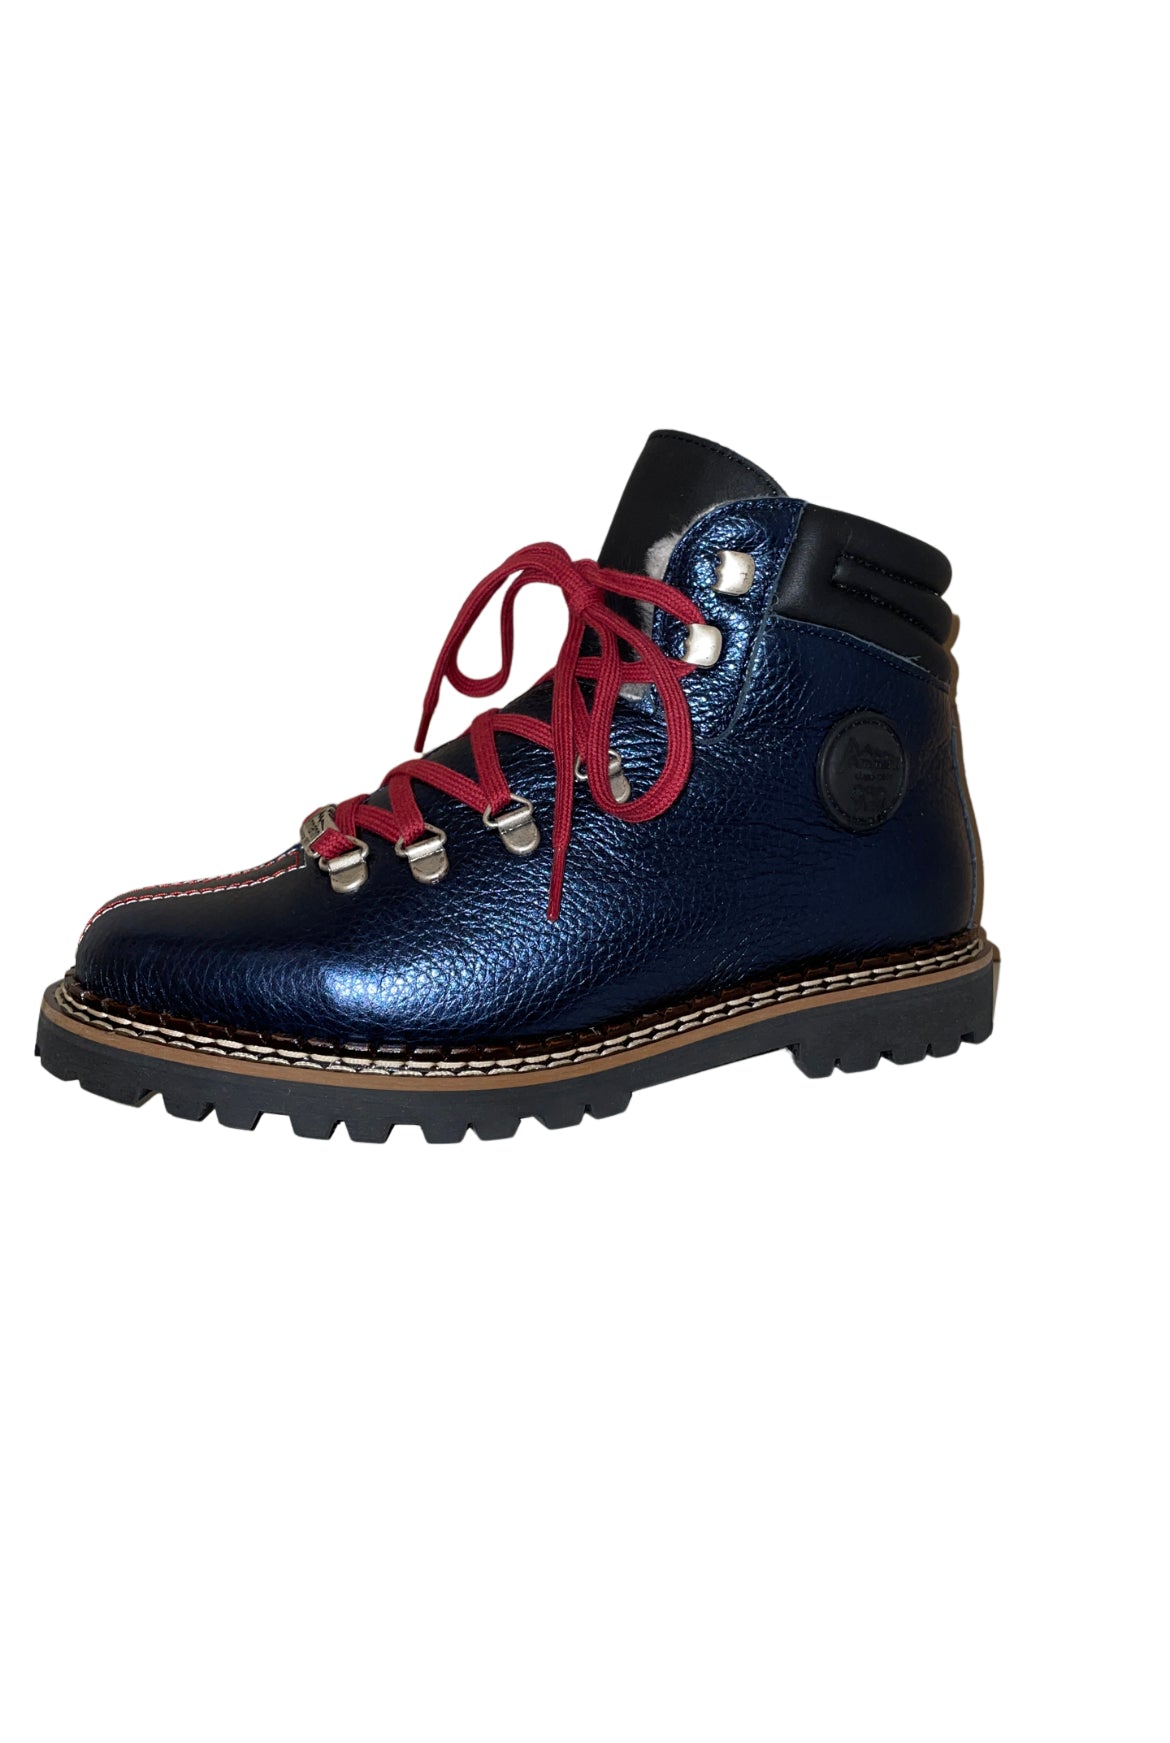 Ammann Town III Metallic Blue Pebble Leather Ankle Boots